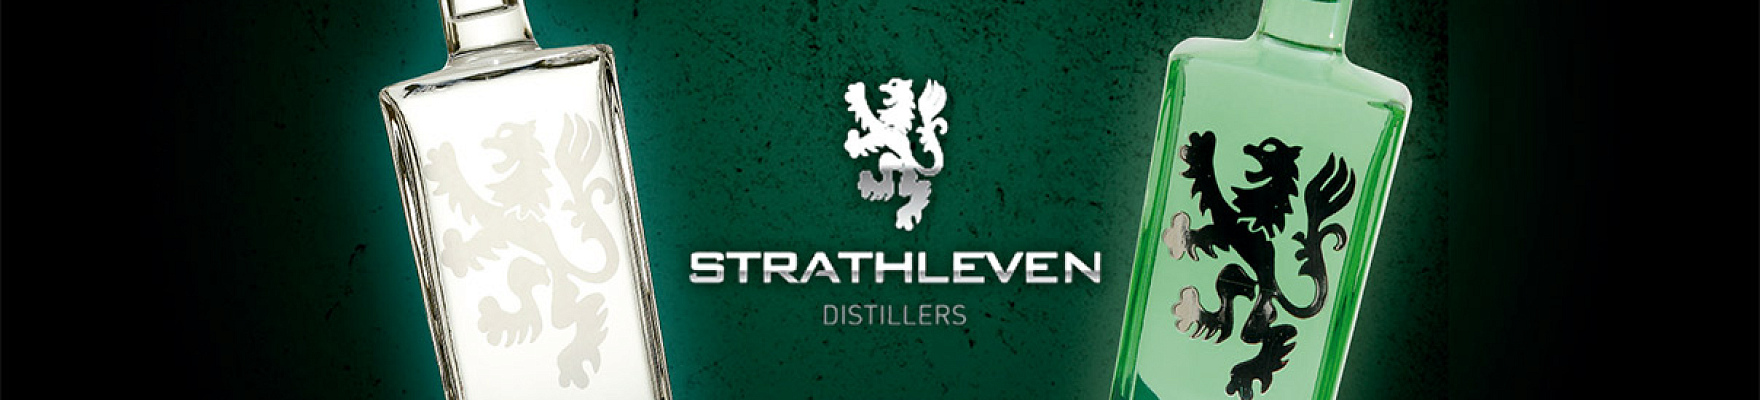 Strathleven Distillers Company